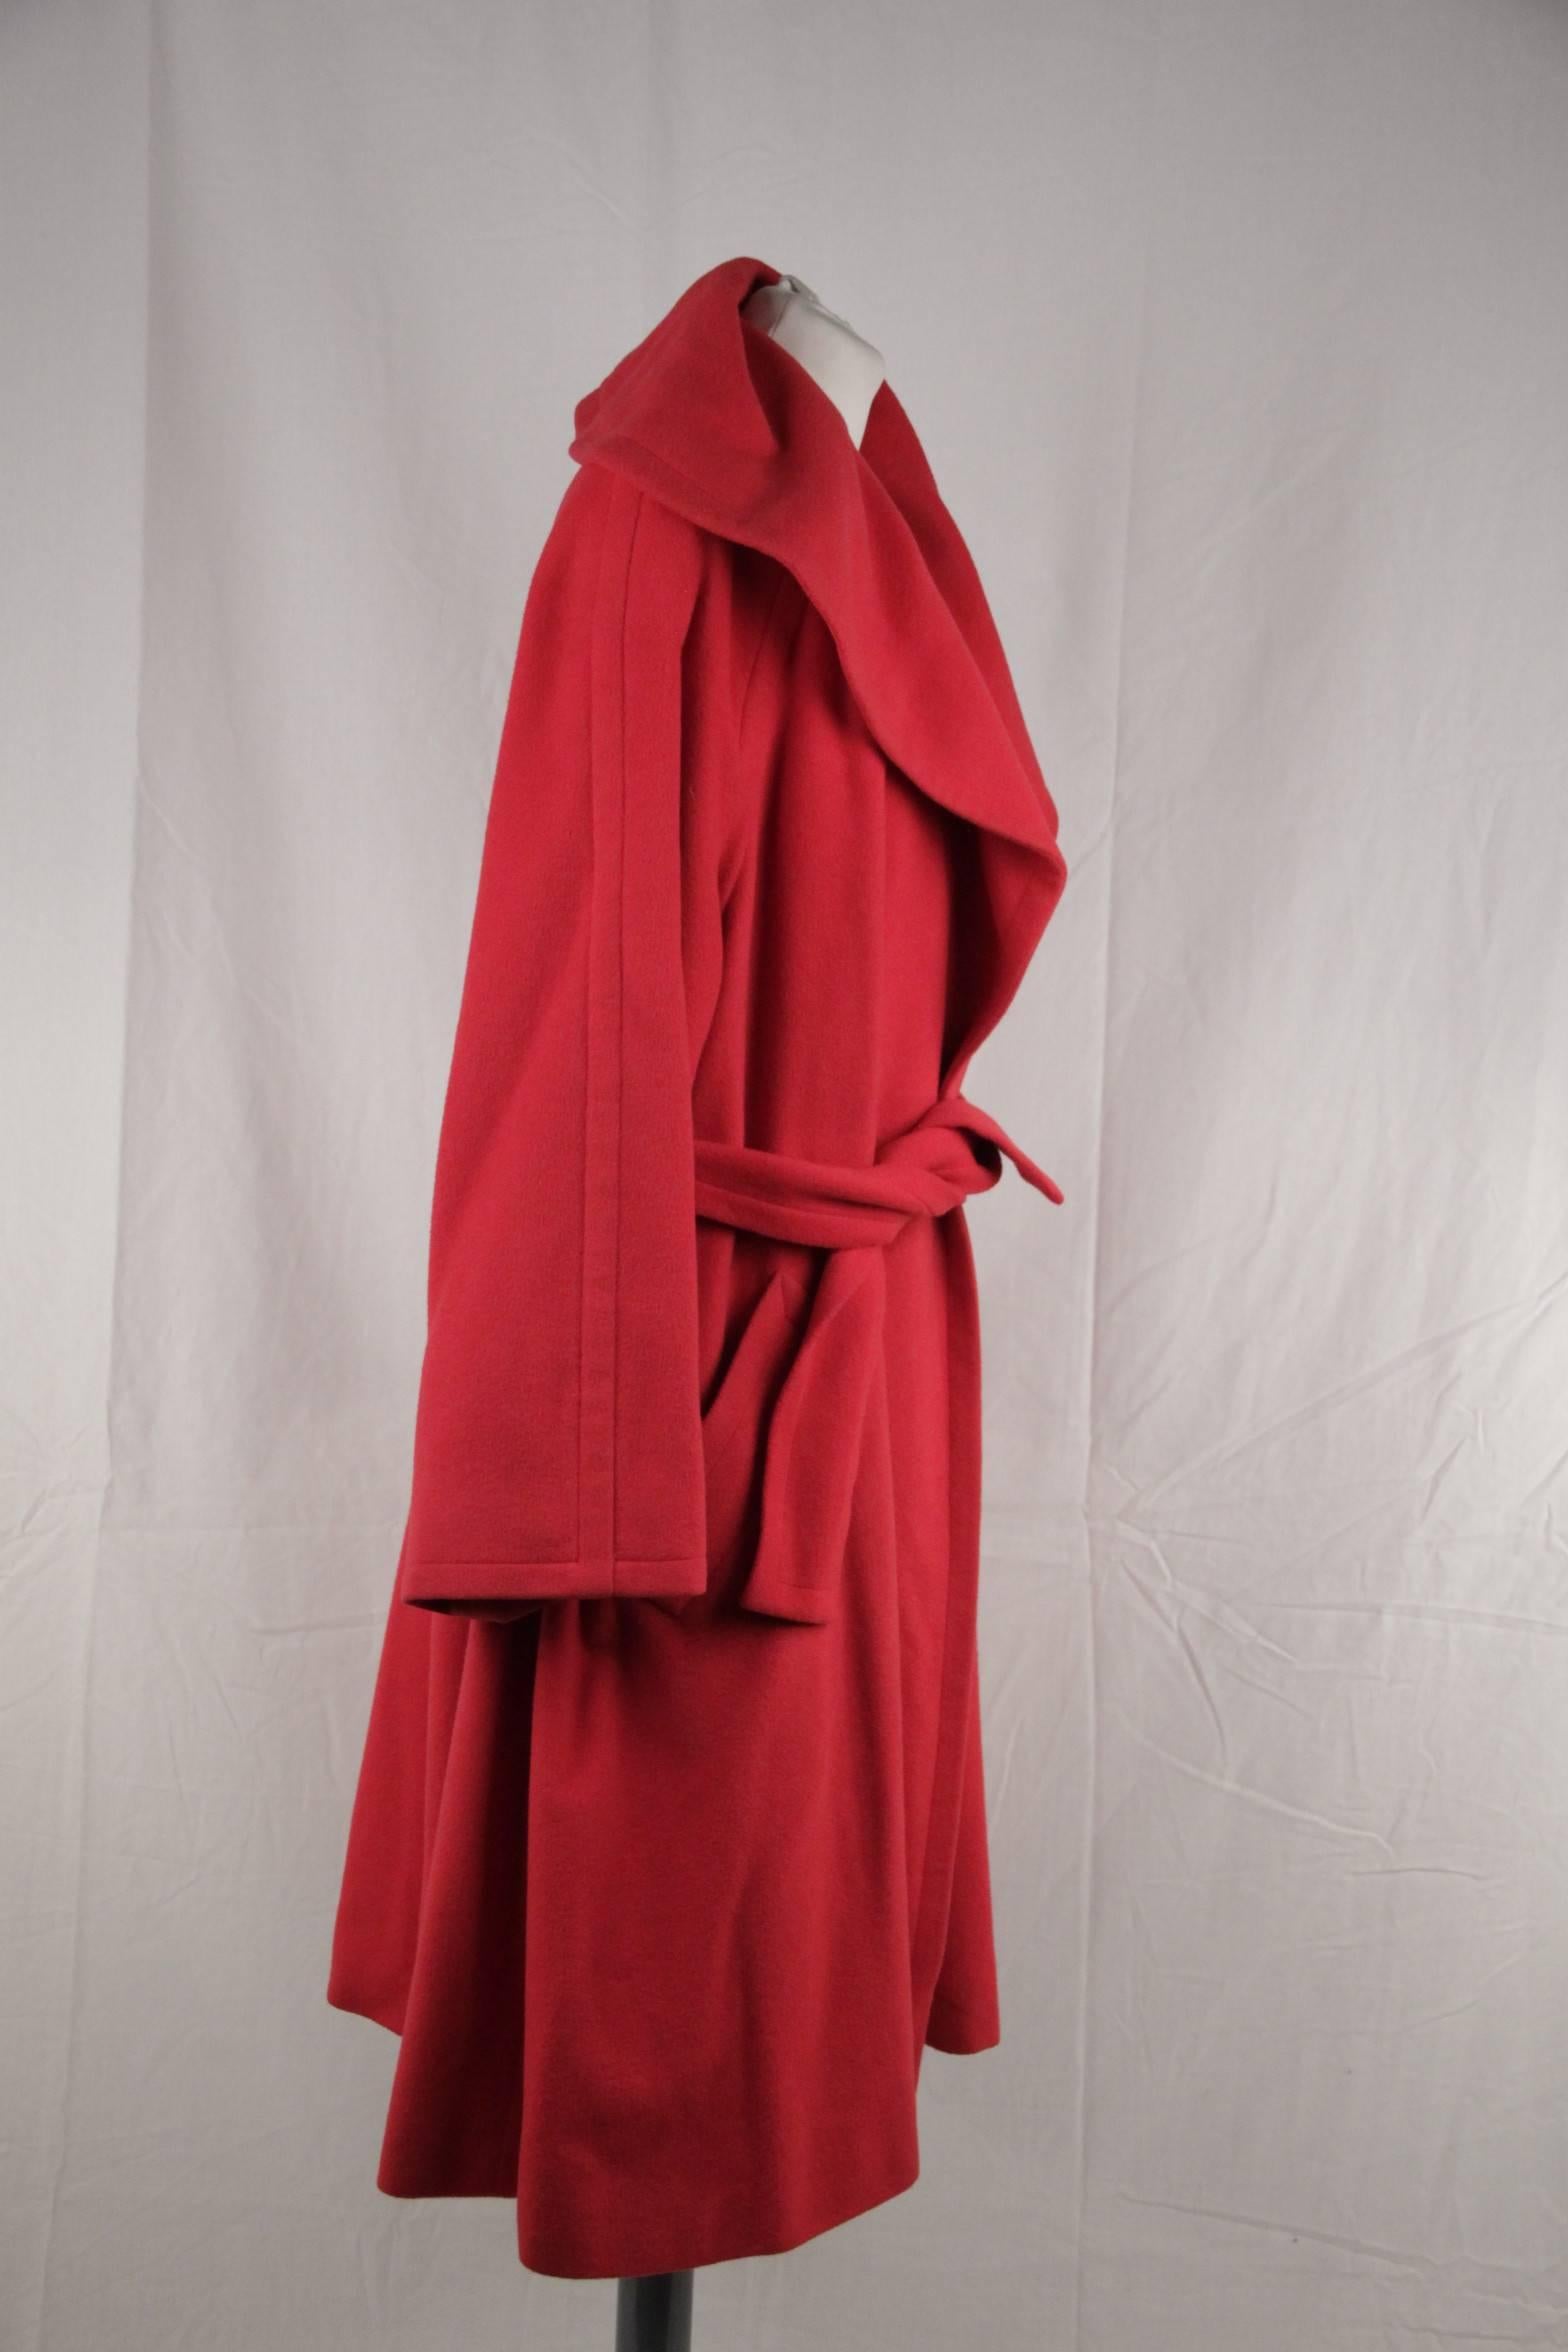 CELINE Vintage Red Wool COAT w/ Self-Tie Belt SIZE 42 In Good Condition In Rome, Rome